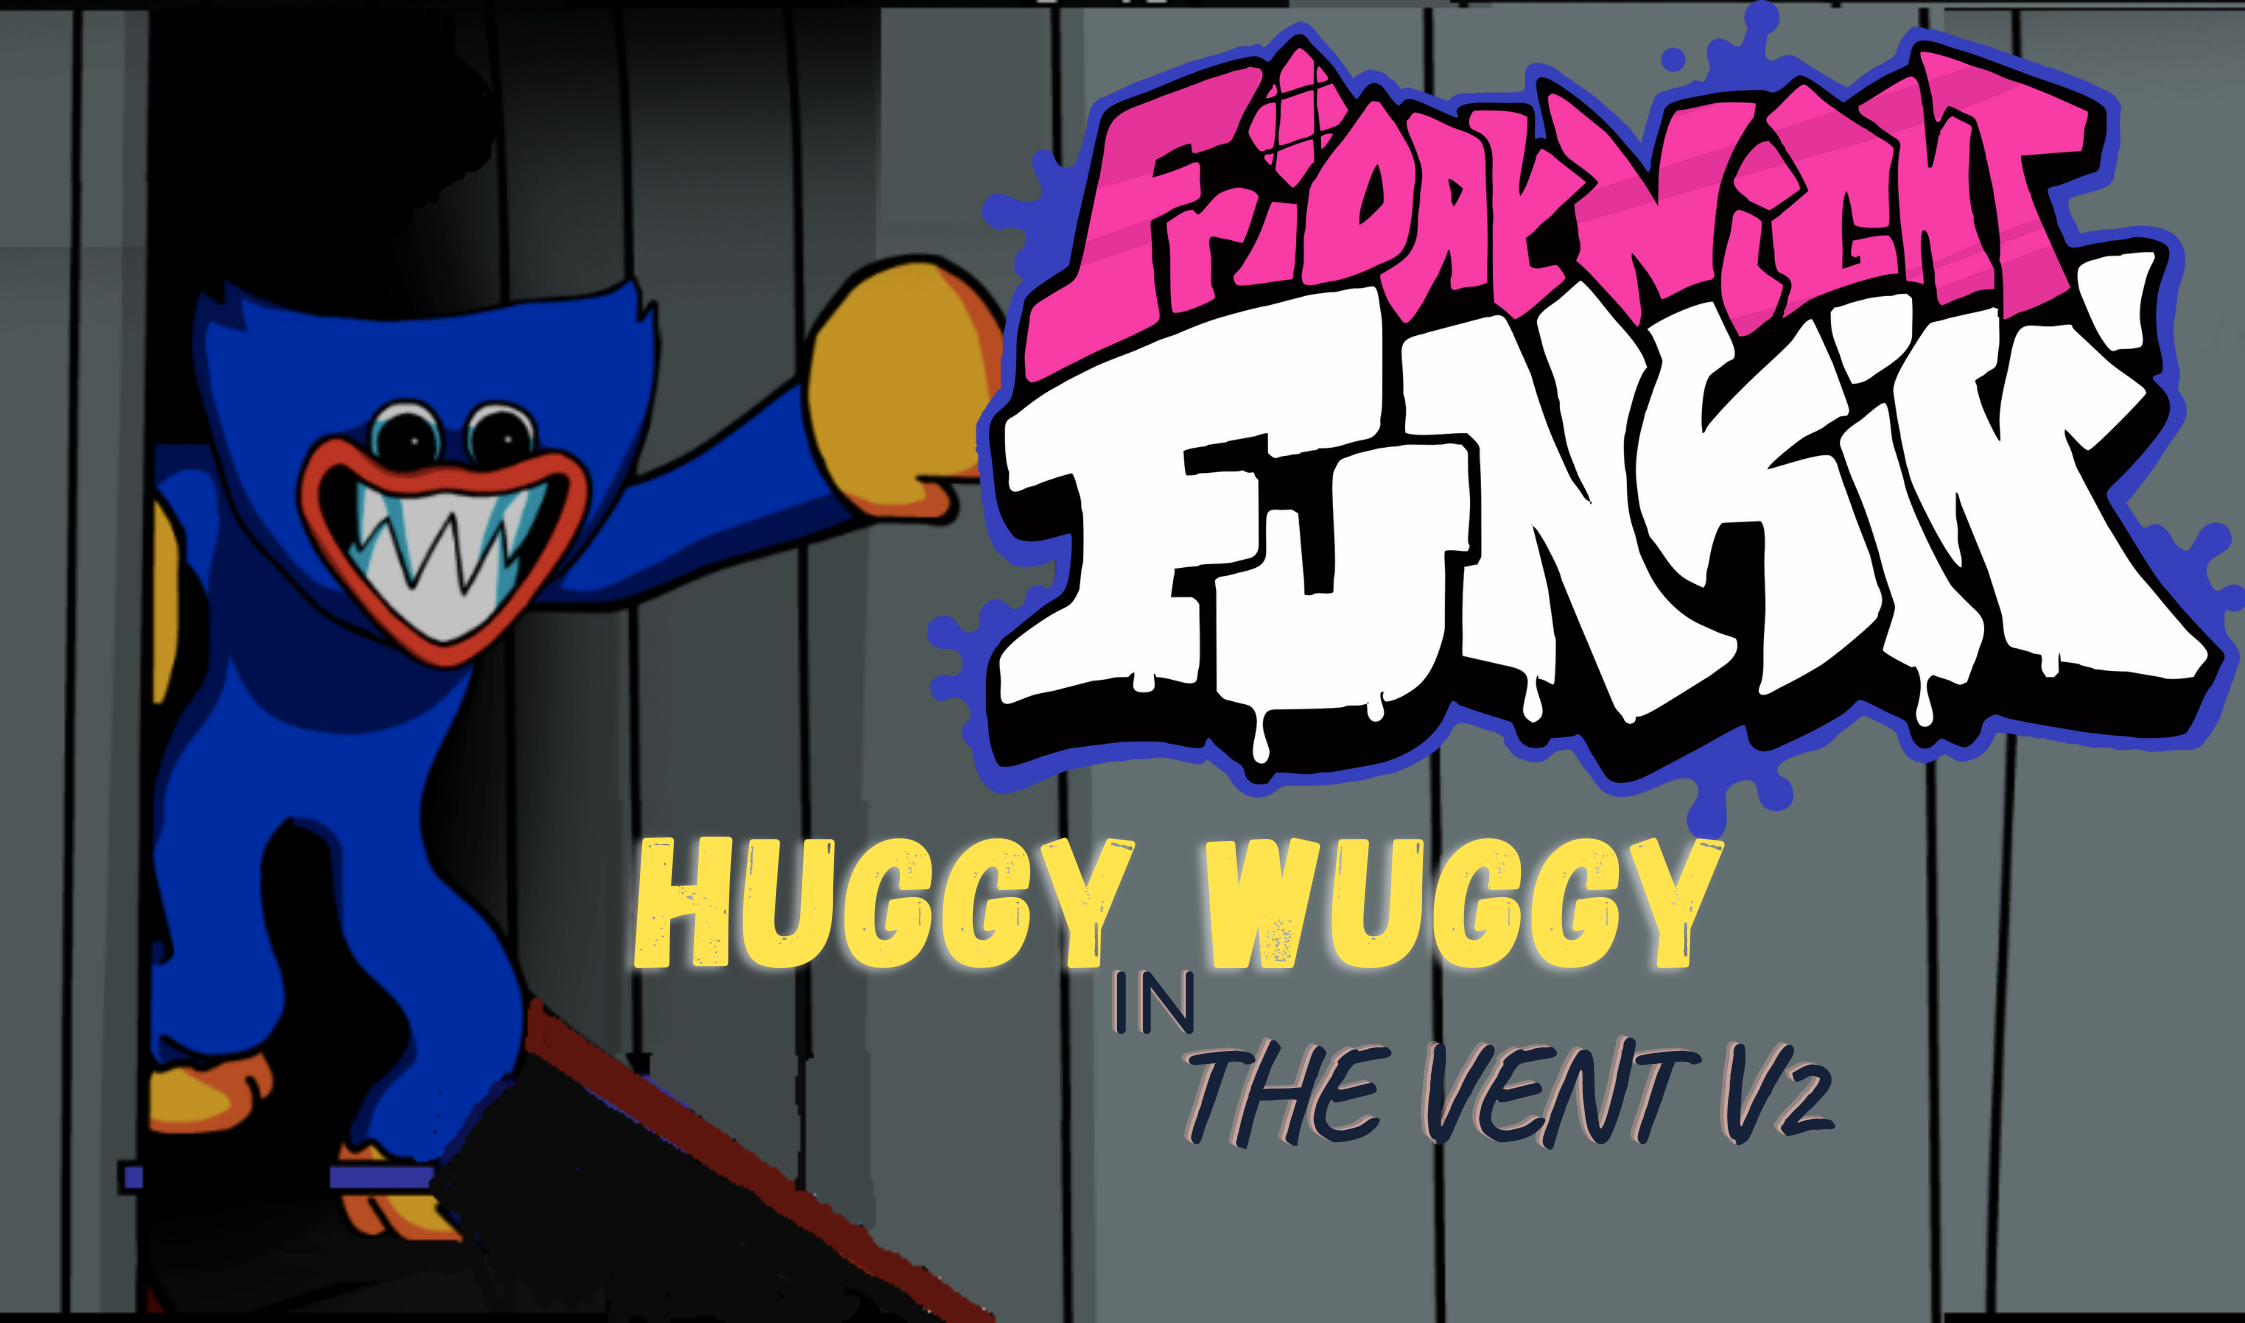 Wuggy fnf huggy FNF vs